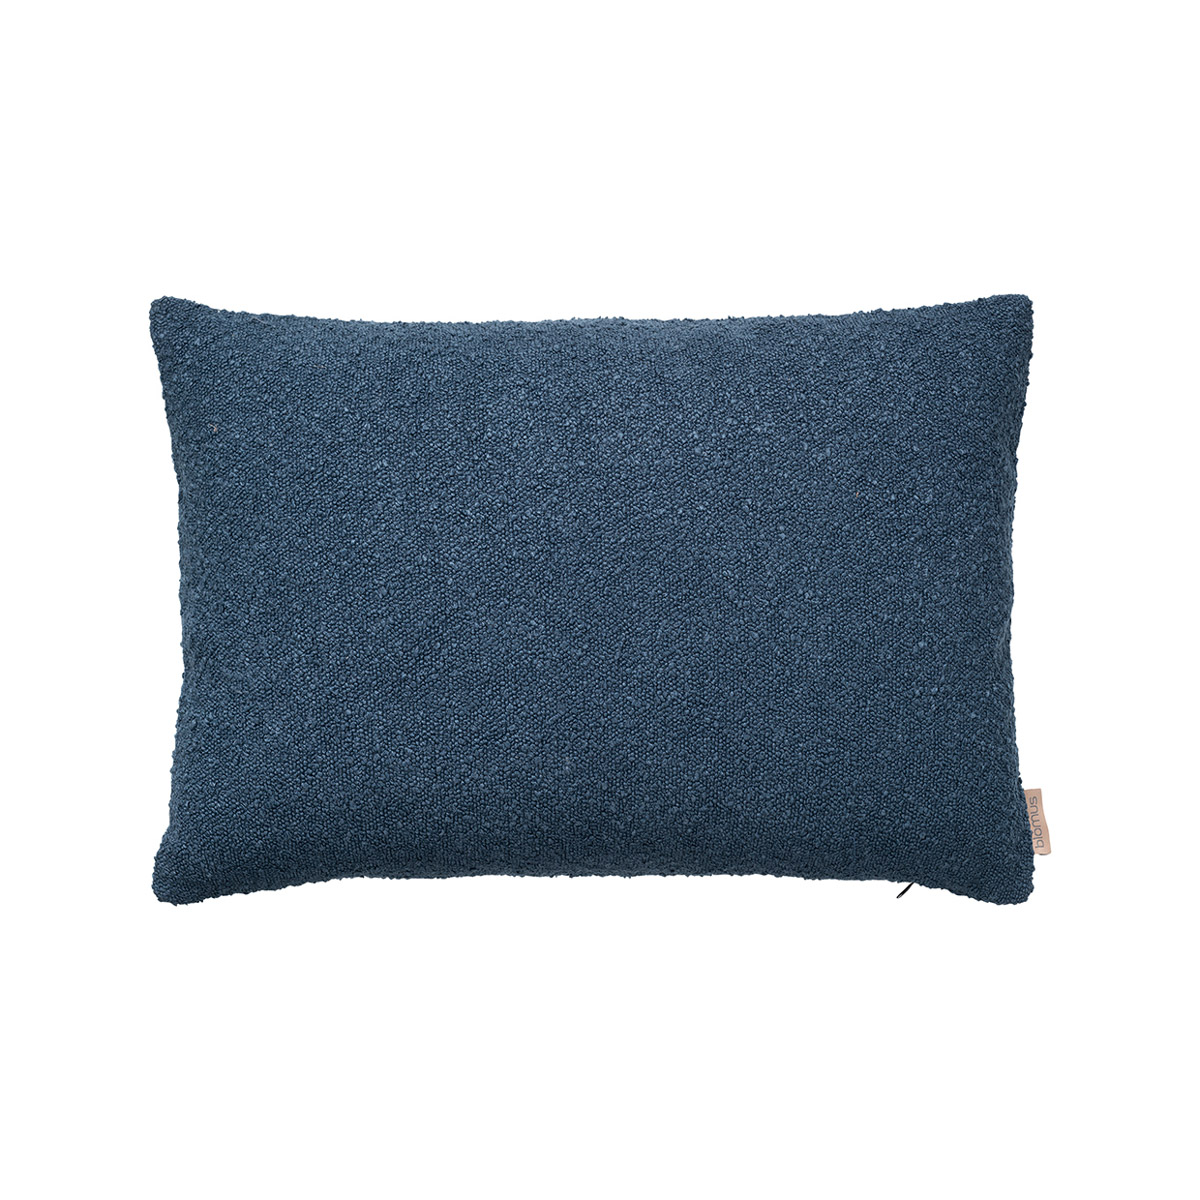 Kissenbezug -BOUCLE- Midnight Blue 40 x 60 cm. Material: 90% Polyester, 10% Acryl. Von Blomus.